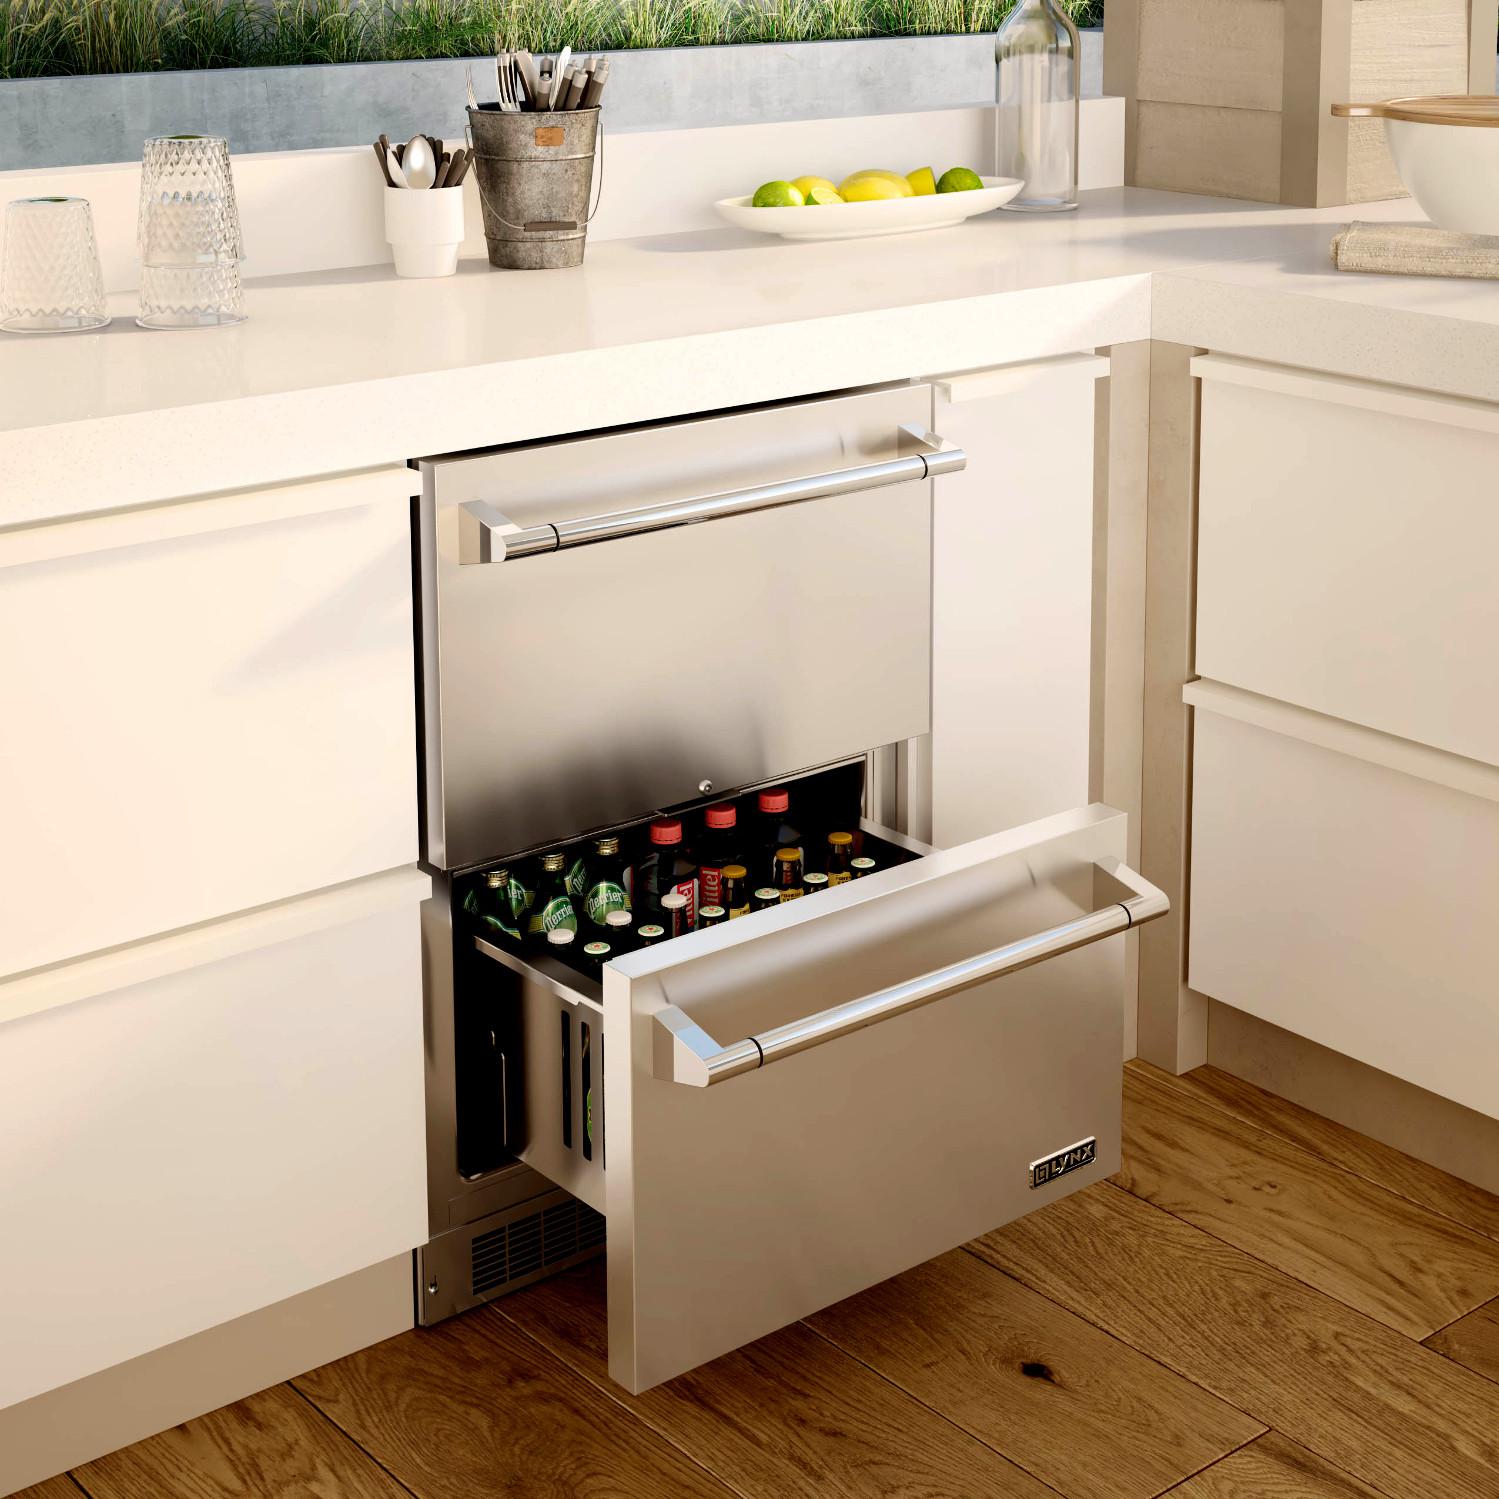 24" Professional Two Drawer Refrigerator